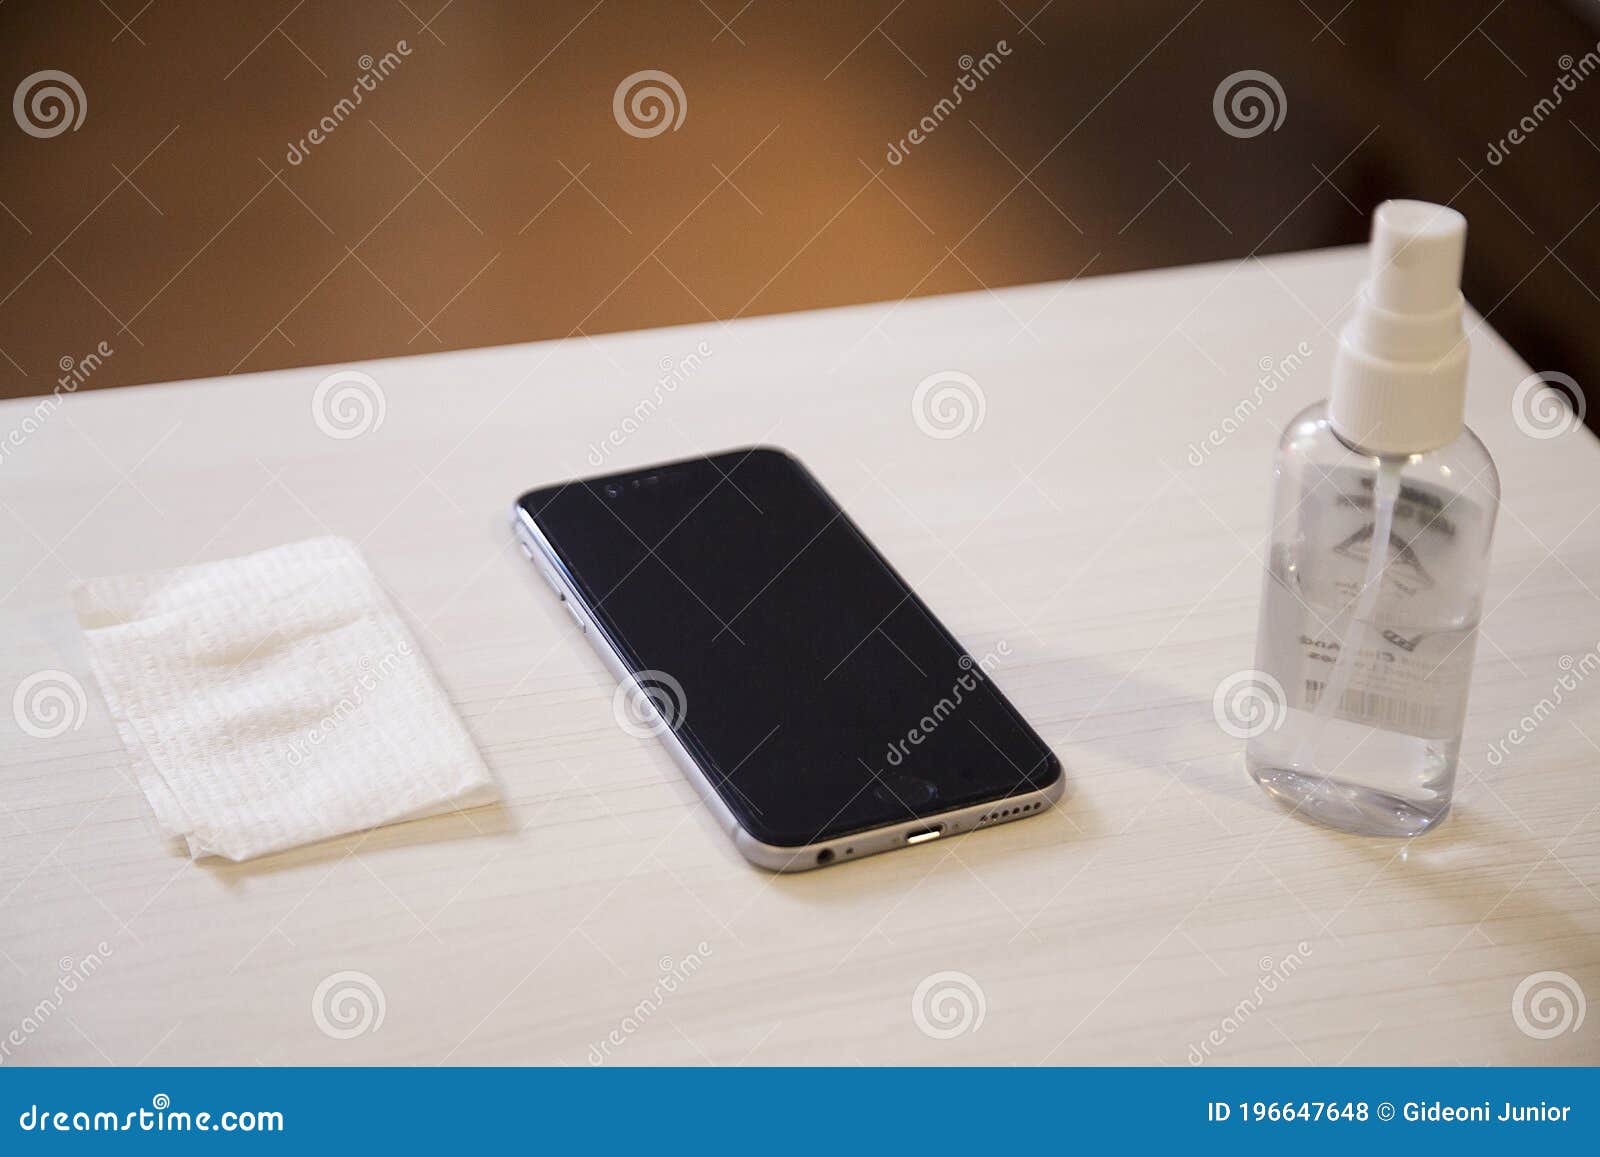 limpando o celular - cleaning the cell phone